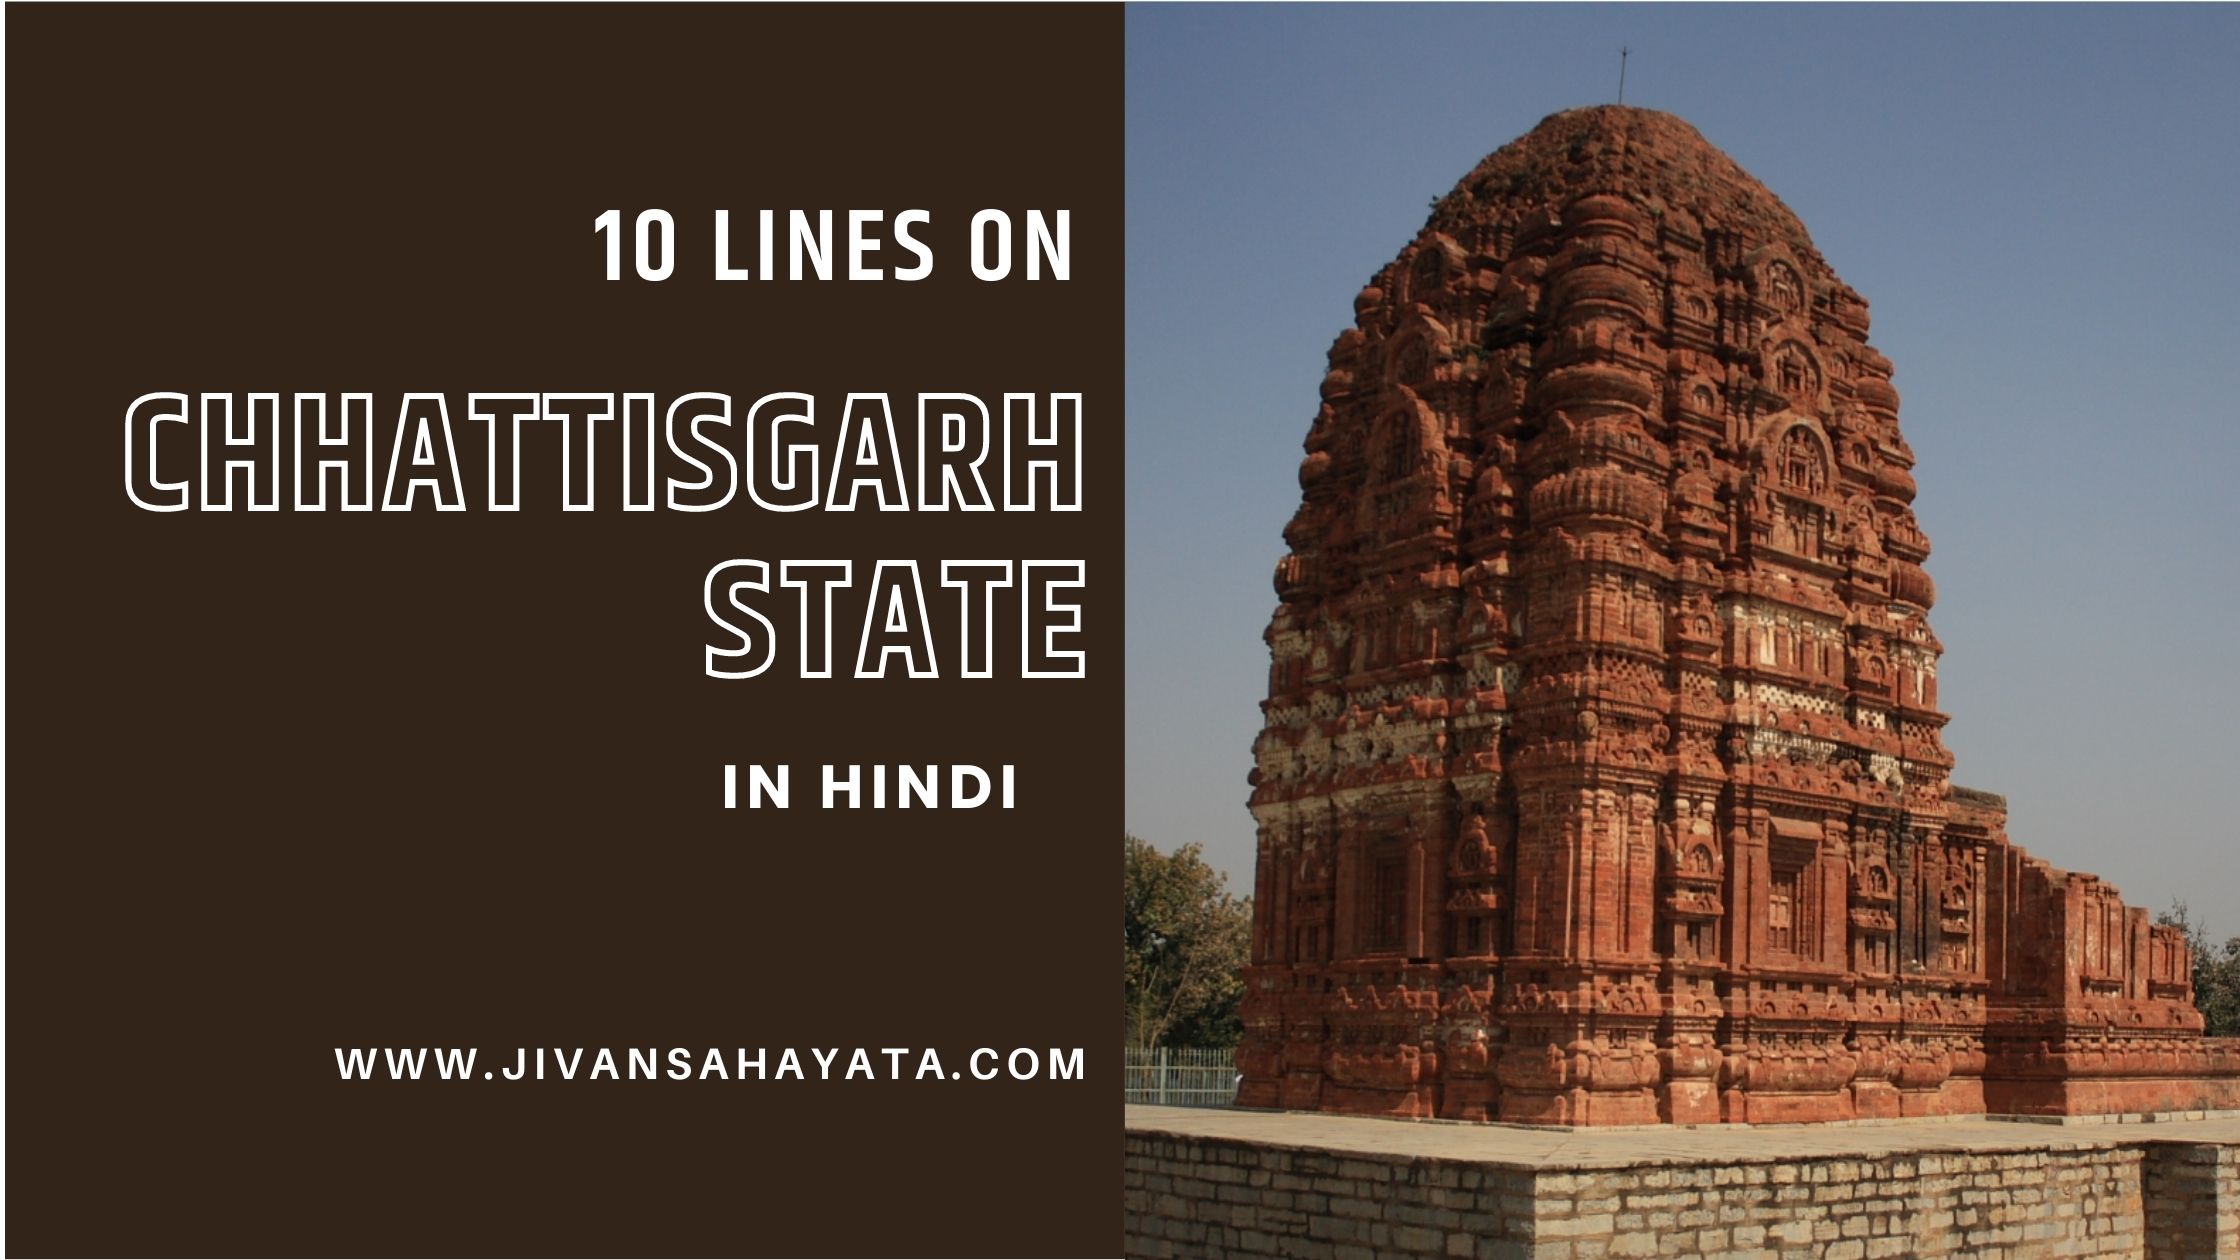 10 lines about Chhattisgarh in Hindi